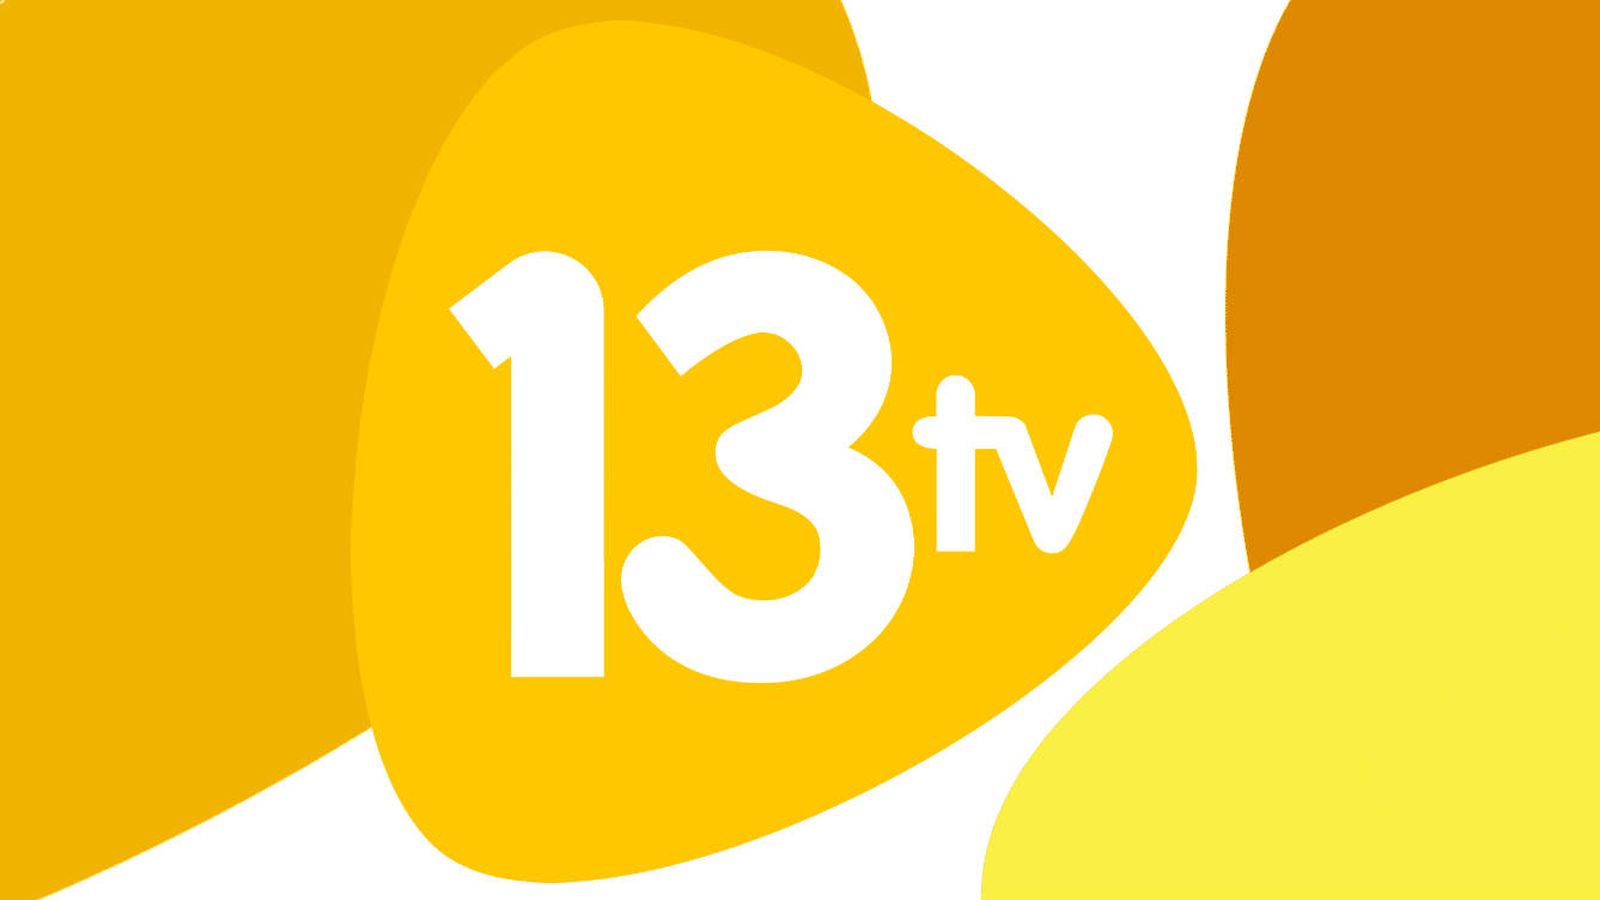 Foto: Logotipo de 13tv